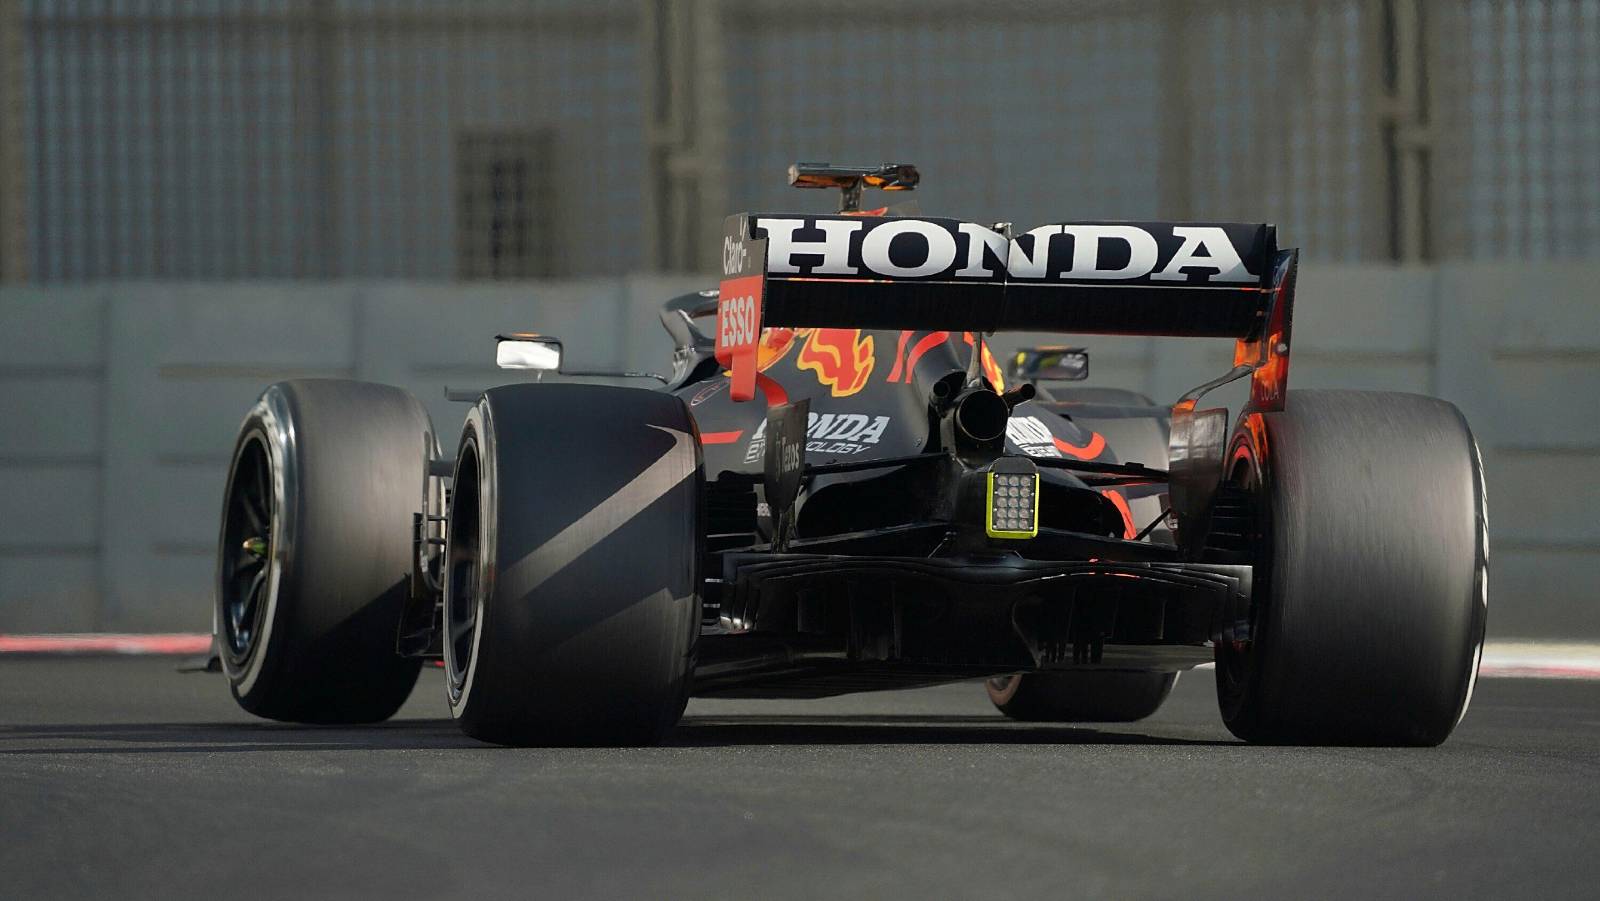 Honda branding Red Bull rear wing. Abu Dhabi December 2021.